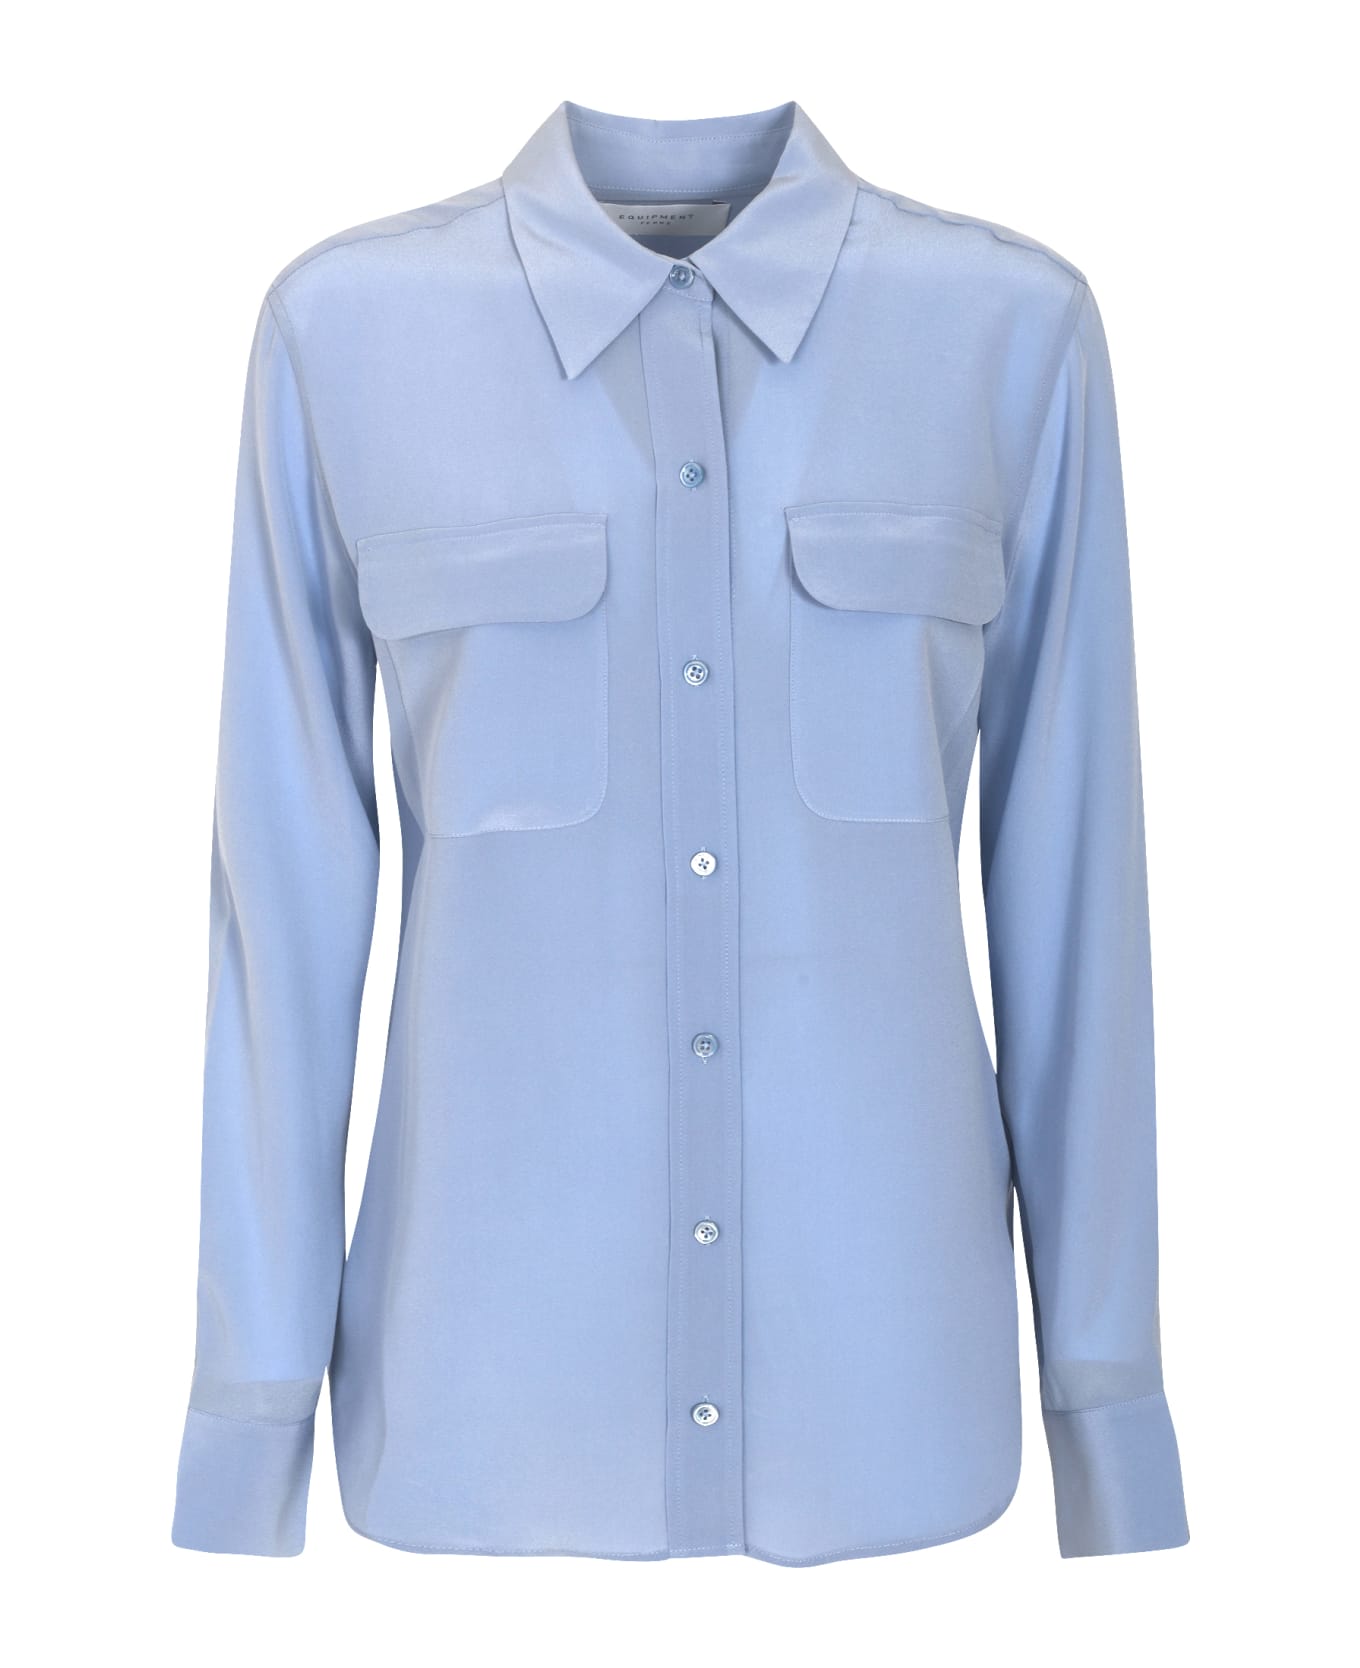 Equipment Round Hem Patched Pocket Plain Shirt - Forever Blue シャツ